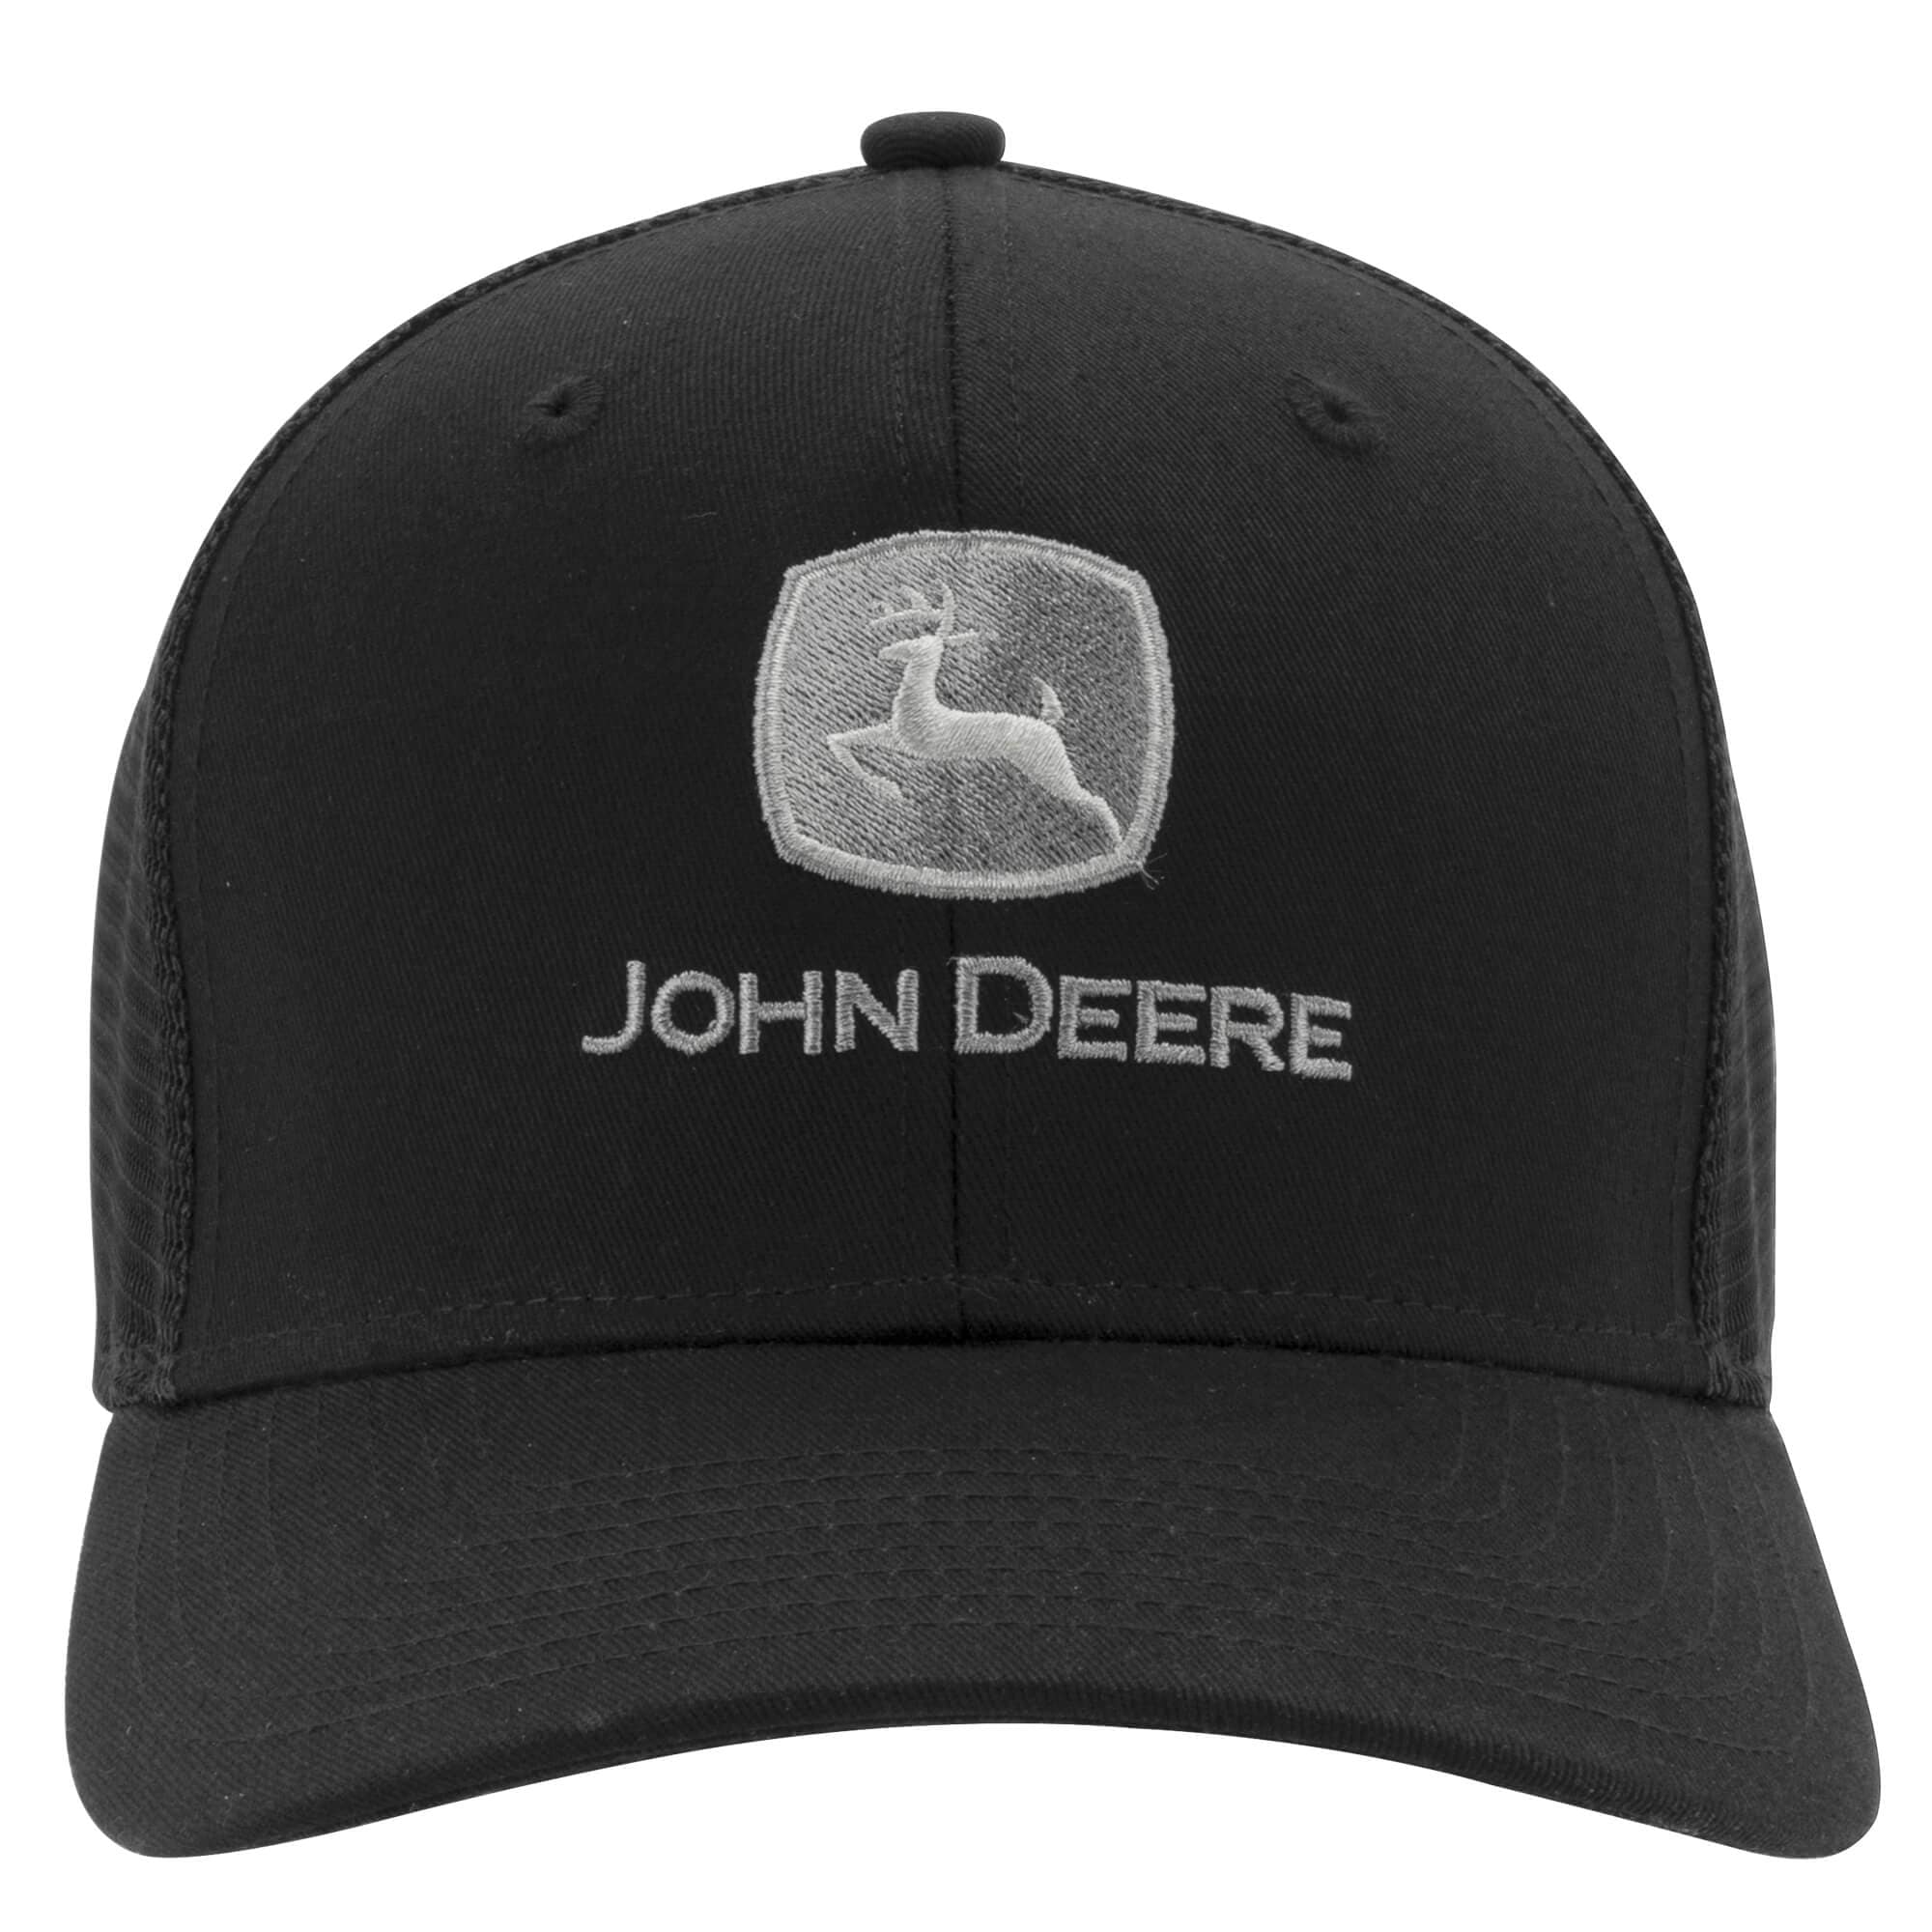 John Deere Men's Black Cotton Baseball Cap at